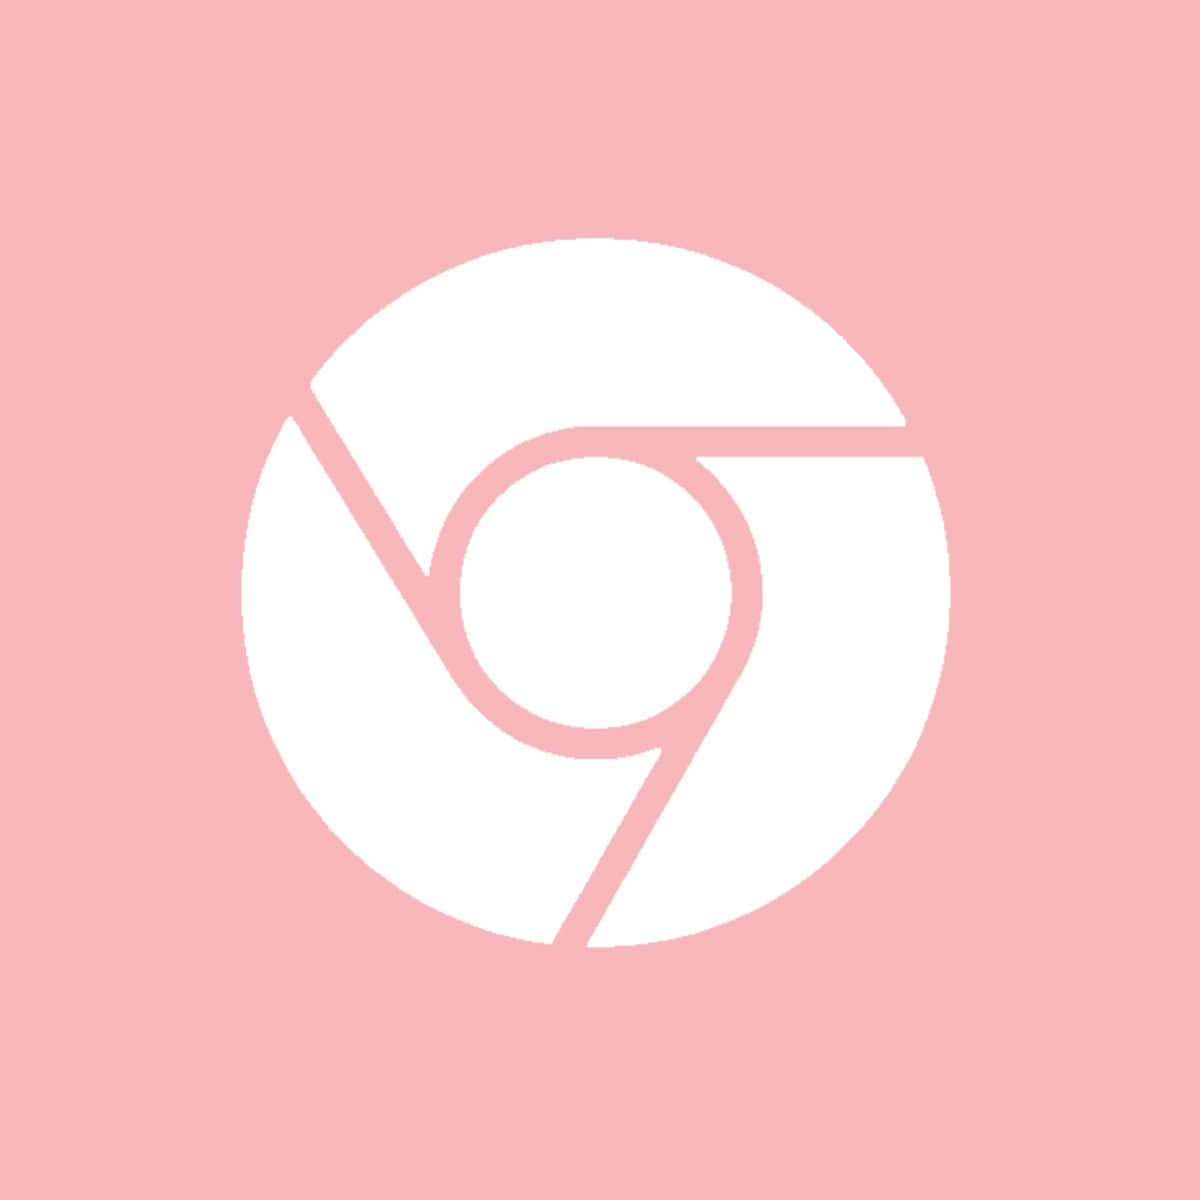 Chrome Logo Pink Background Wallpaper